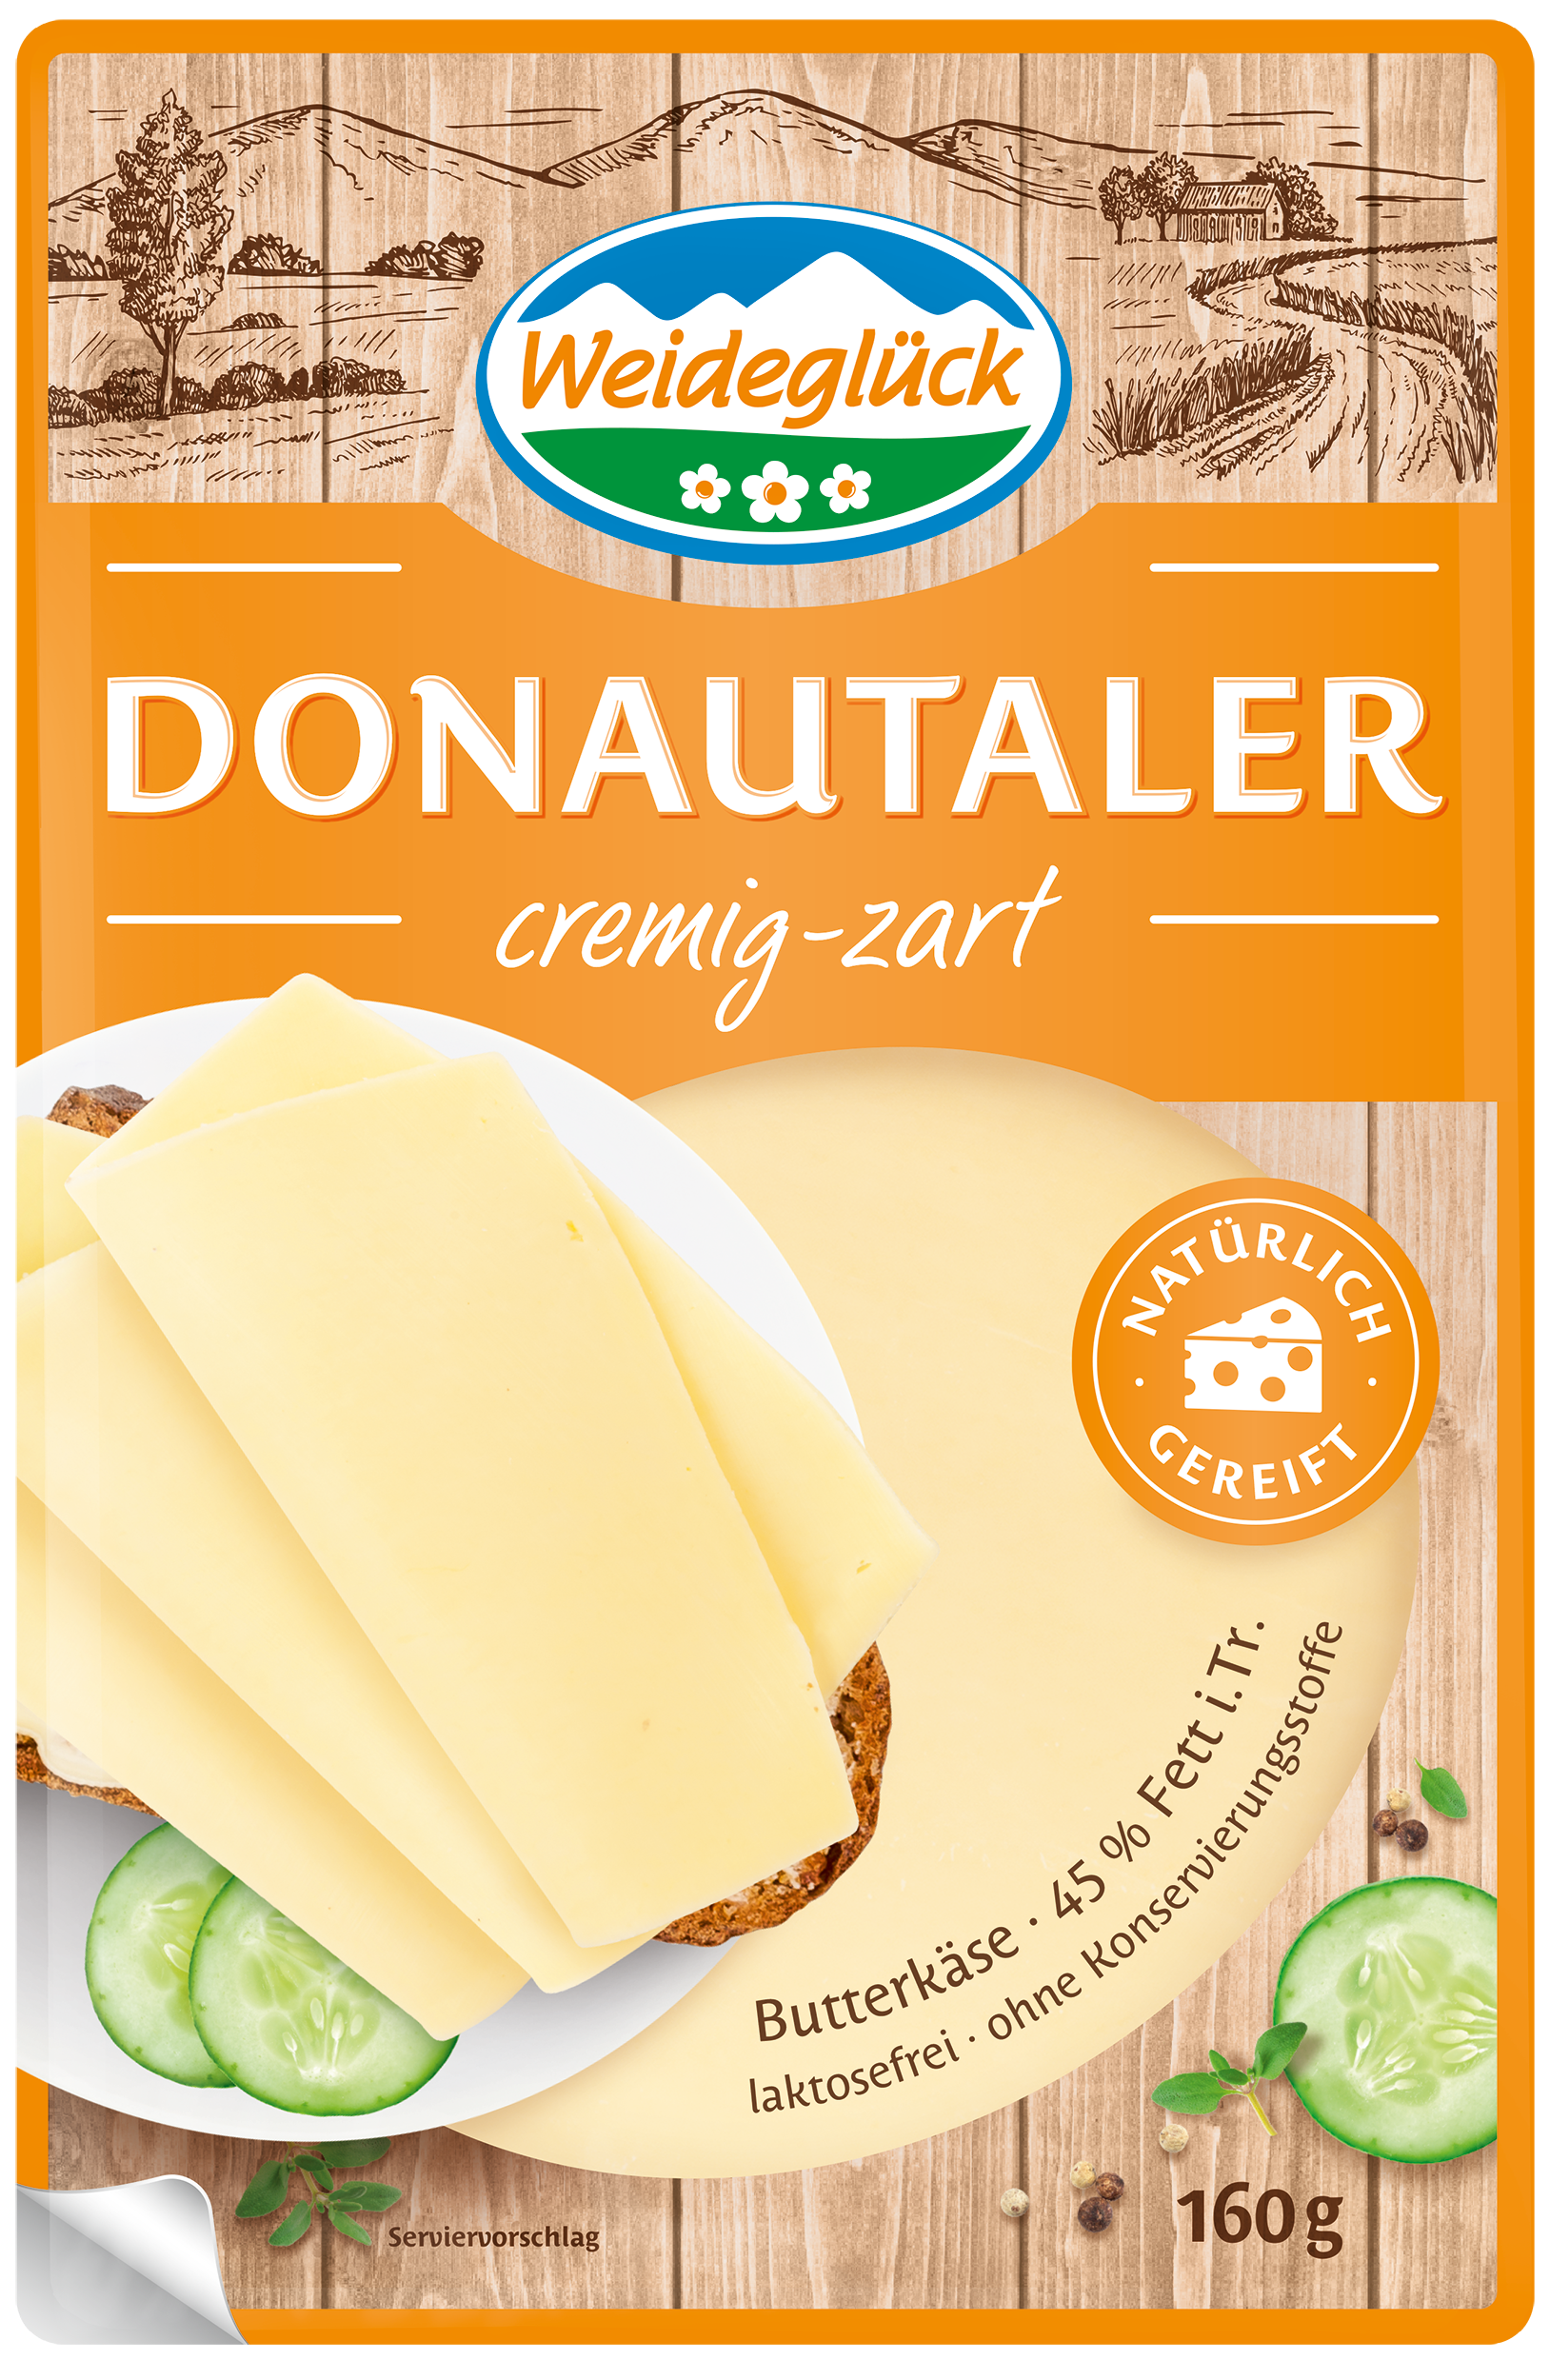 Packshot Weideglück Käse im Kühlregal Donautaler Butterkäse Scheiben cremig-zart 160 Gramm